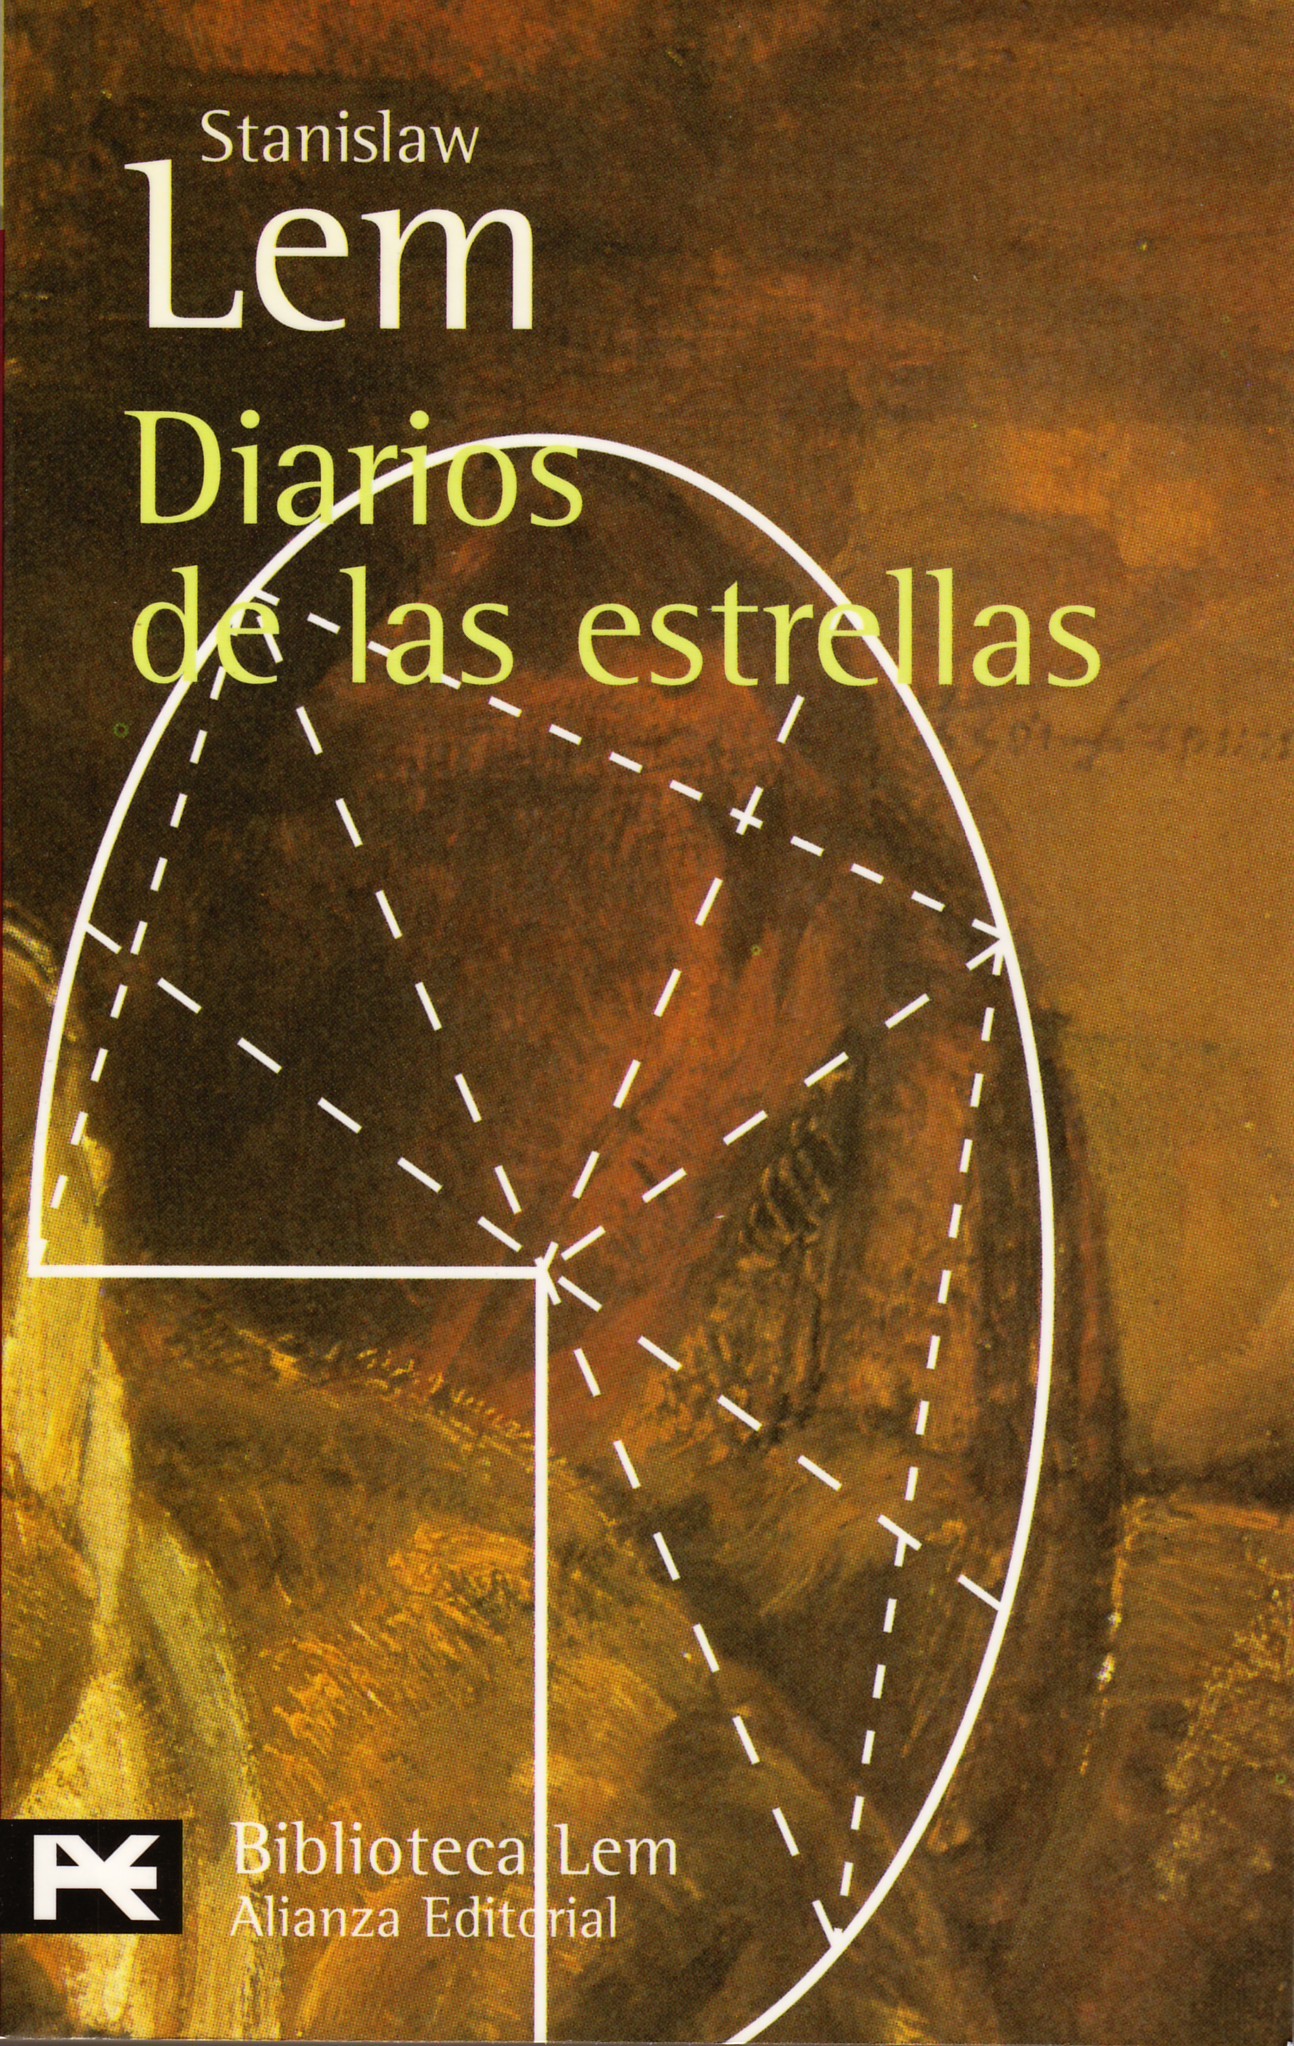 Star Diaries Spanish Alianza Editorial 2005.jpg